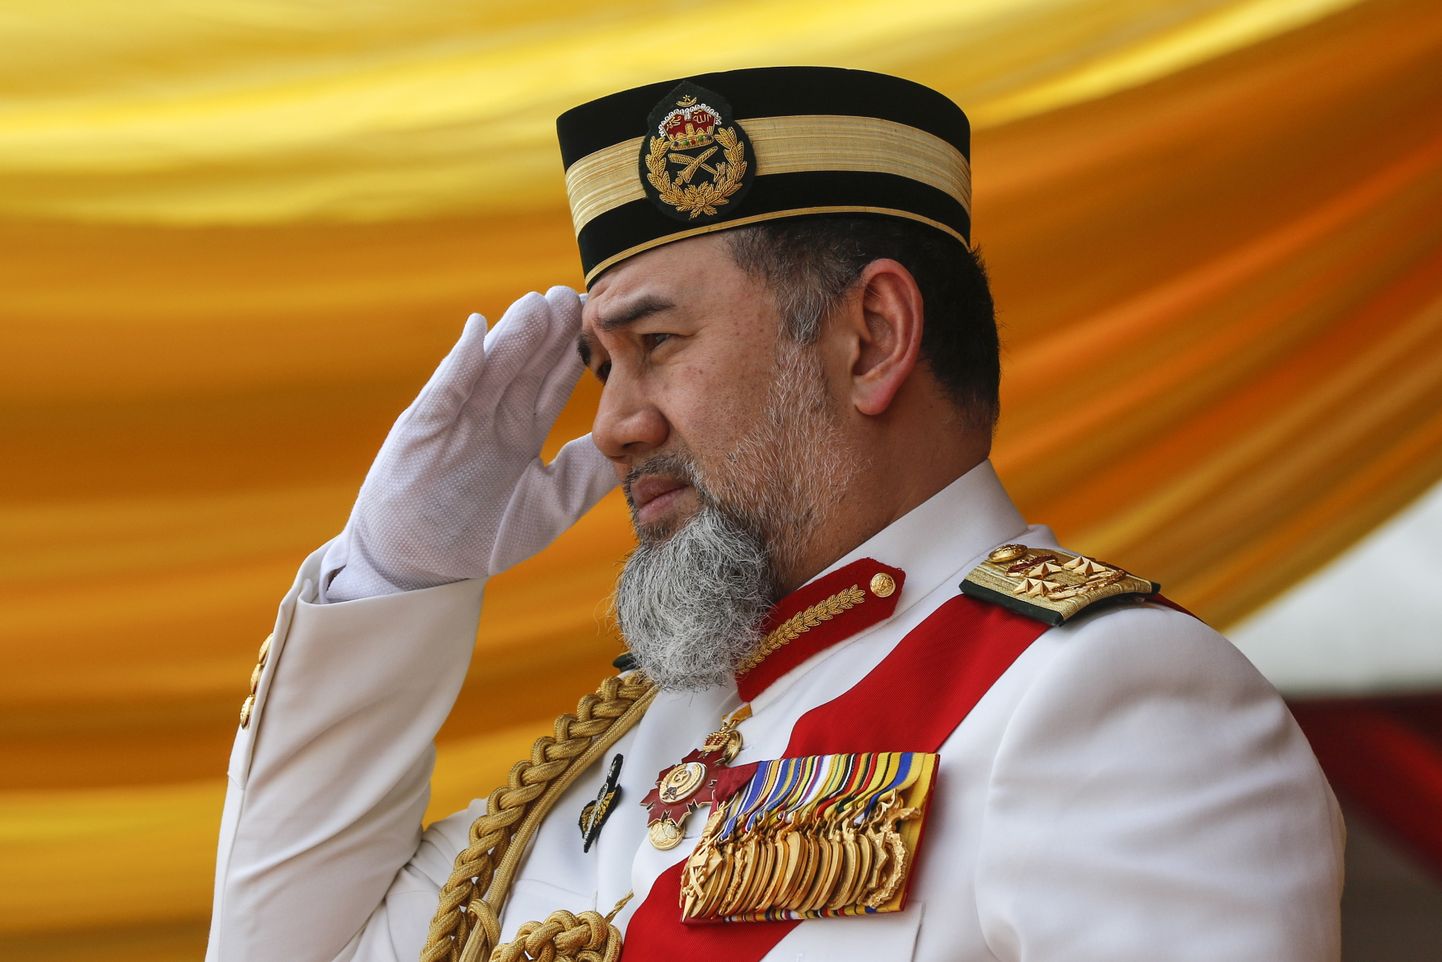 Бывший король Малайзии Мухаммад V